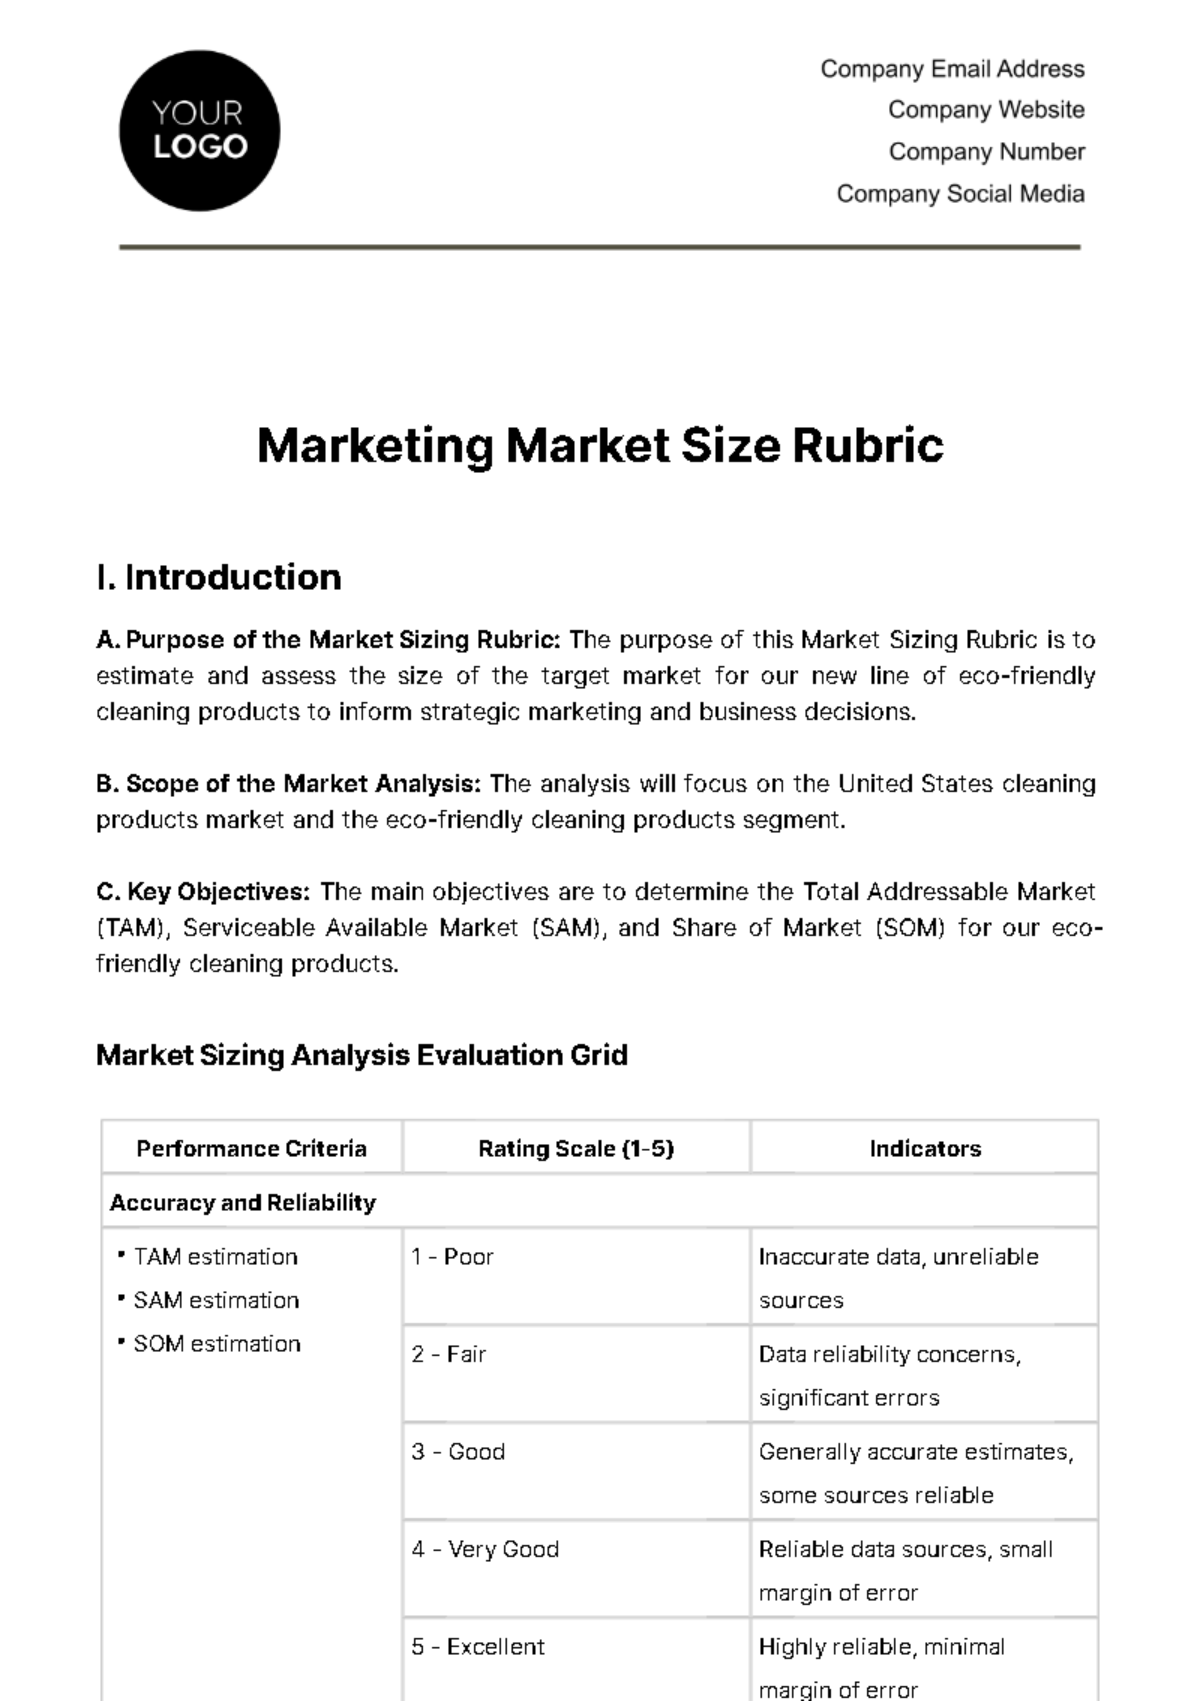 Free Marketing Market Size Rubric Template